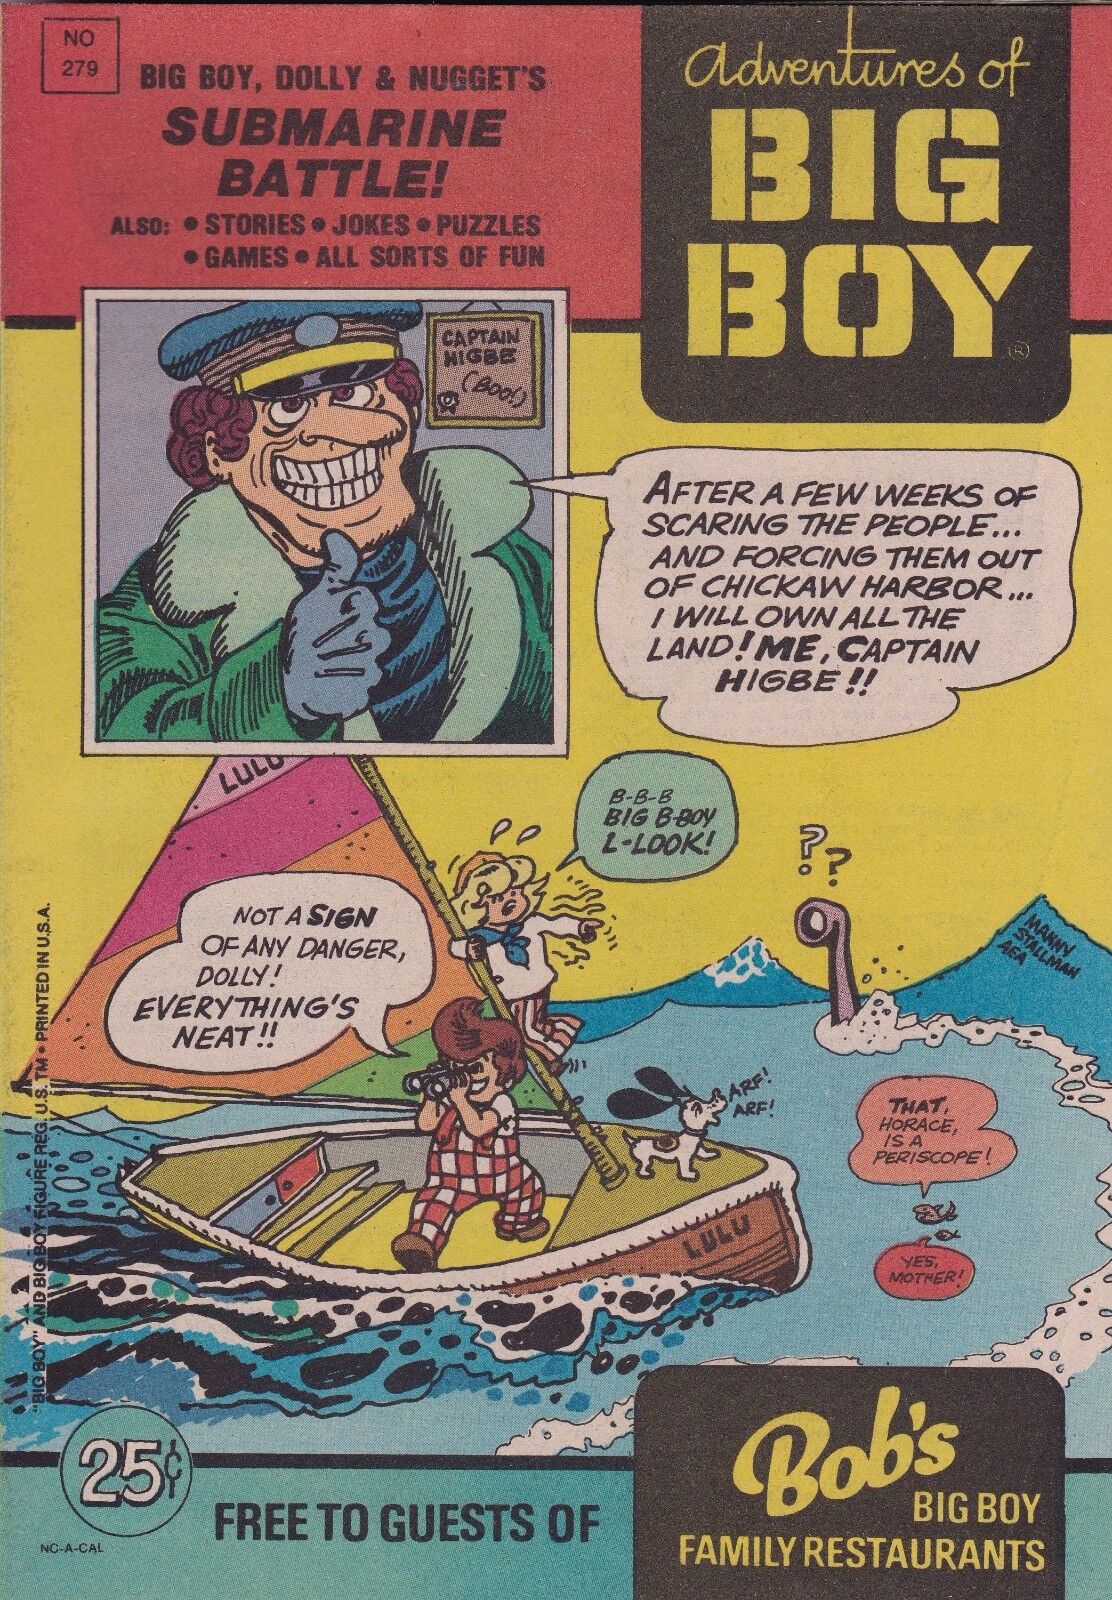 ADVENTURE OF BIG BOY PROMO COMIC BOOK #279 1980 BOB\'S BIG BOY FAMILY RESTAURANT